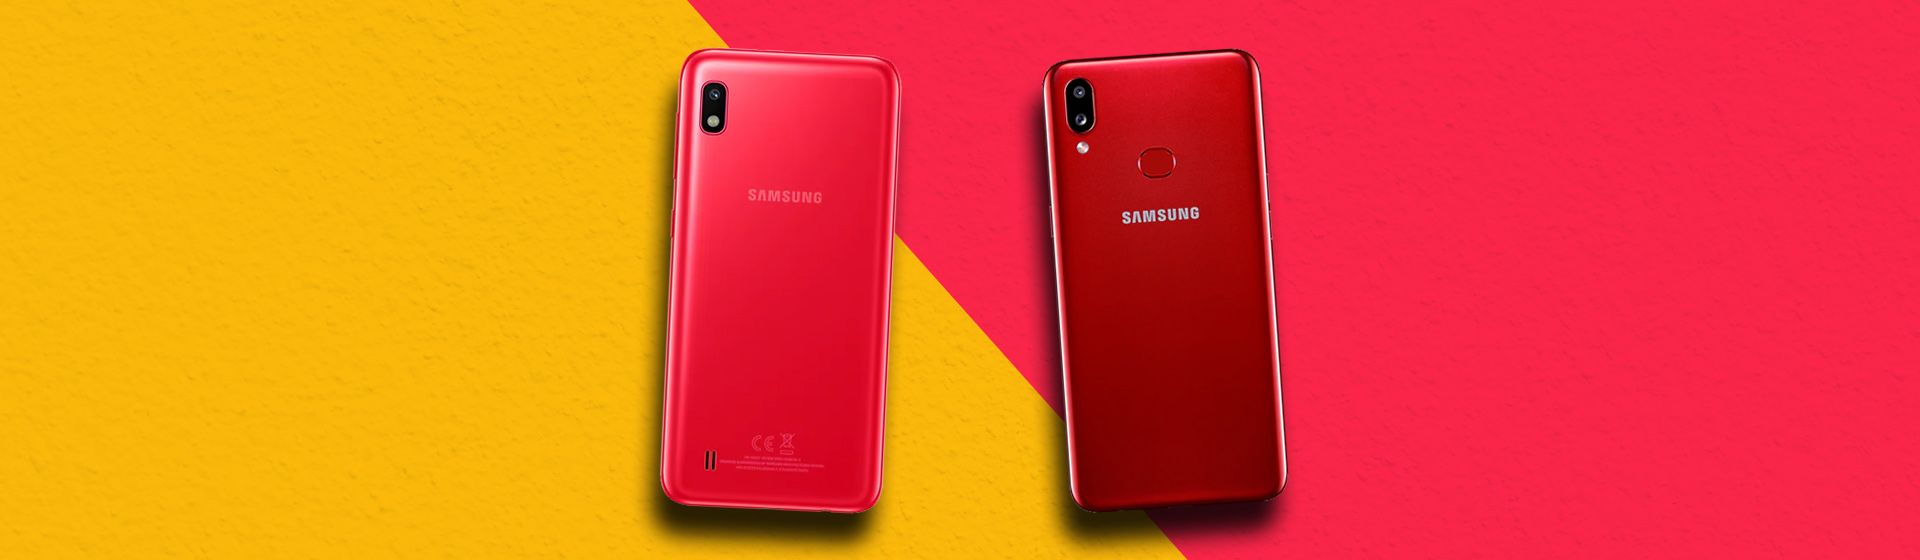 Capa do post: Galaxy A10 vs Galaxy A10s: compare ficha técnica dos celulares Samsung